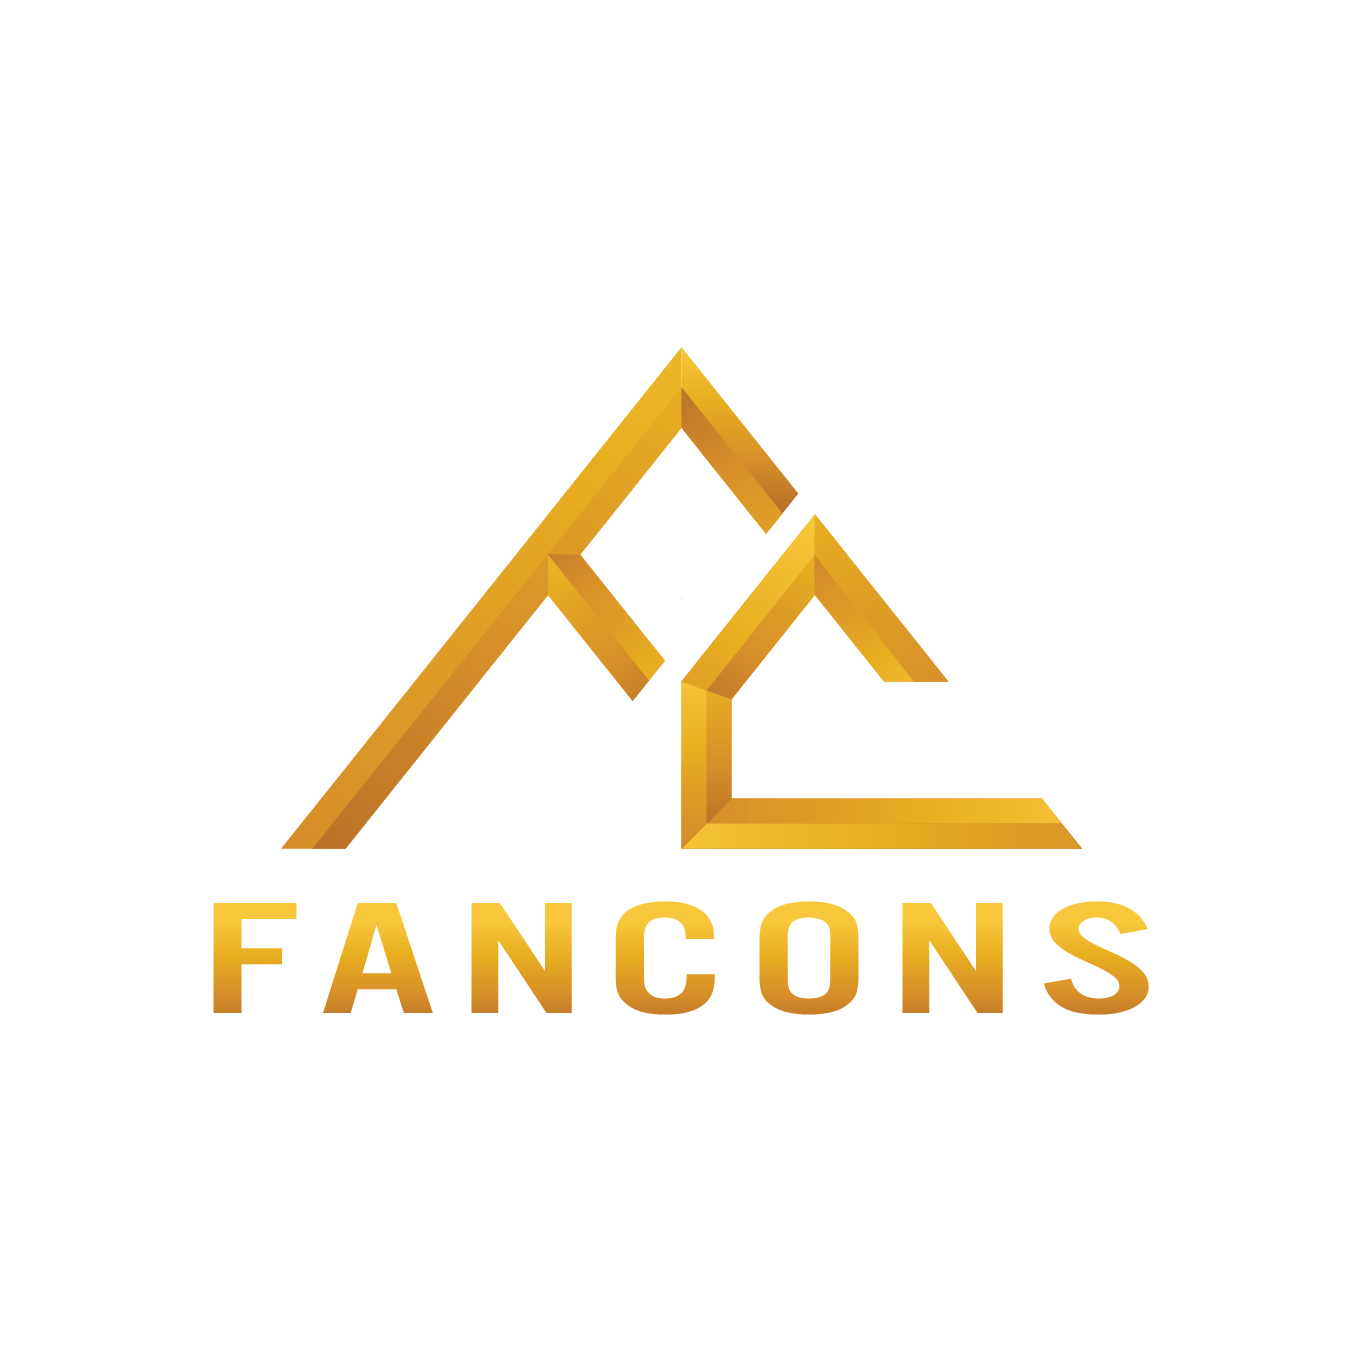 Fancons